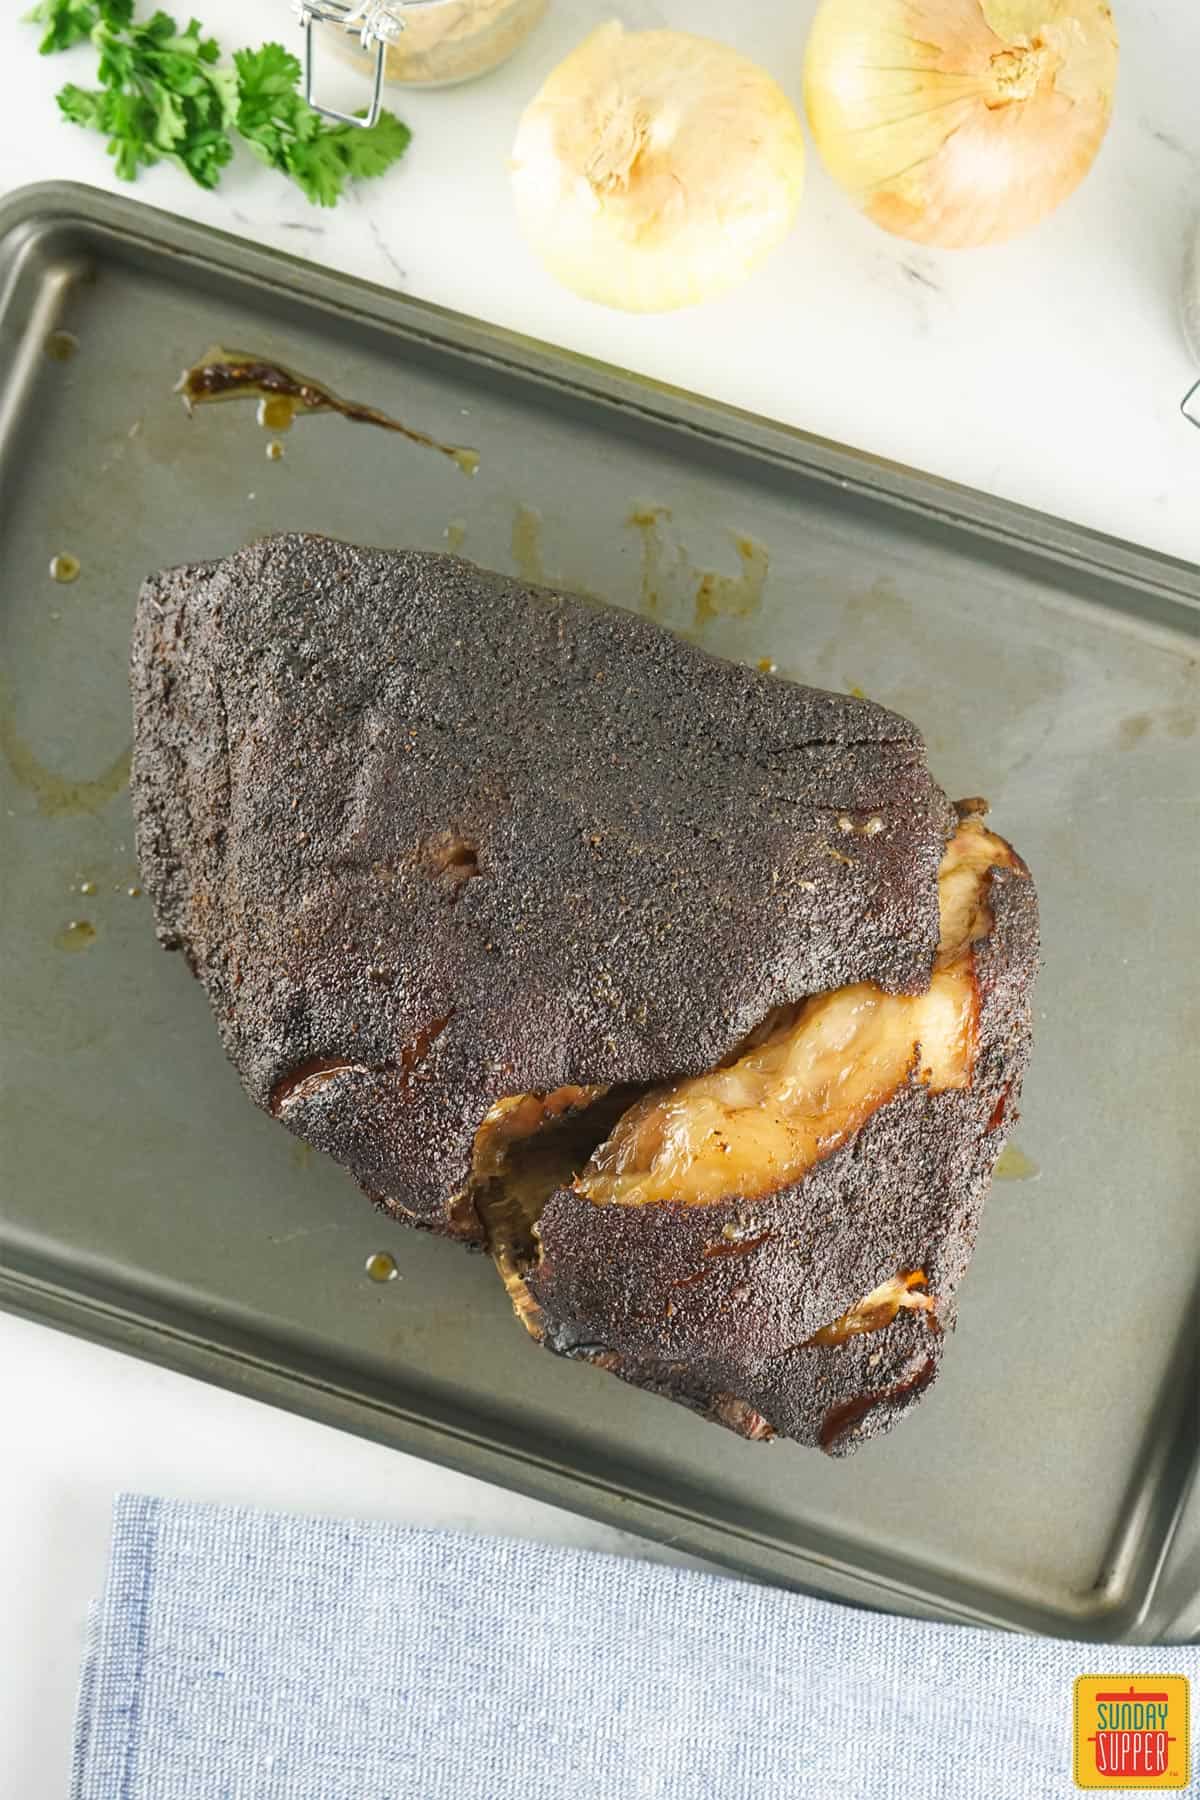 Smoked pork butt on the sheet pan